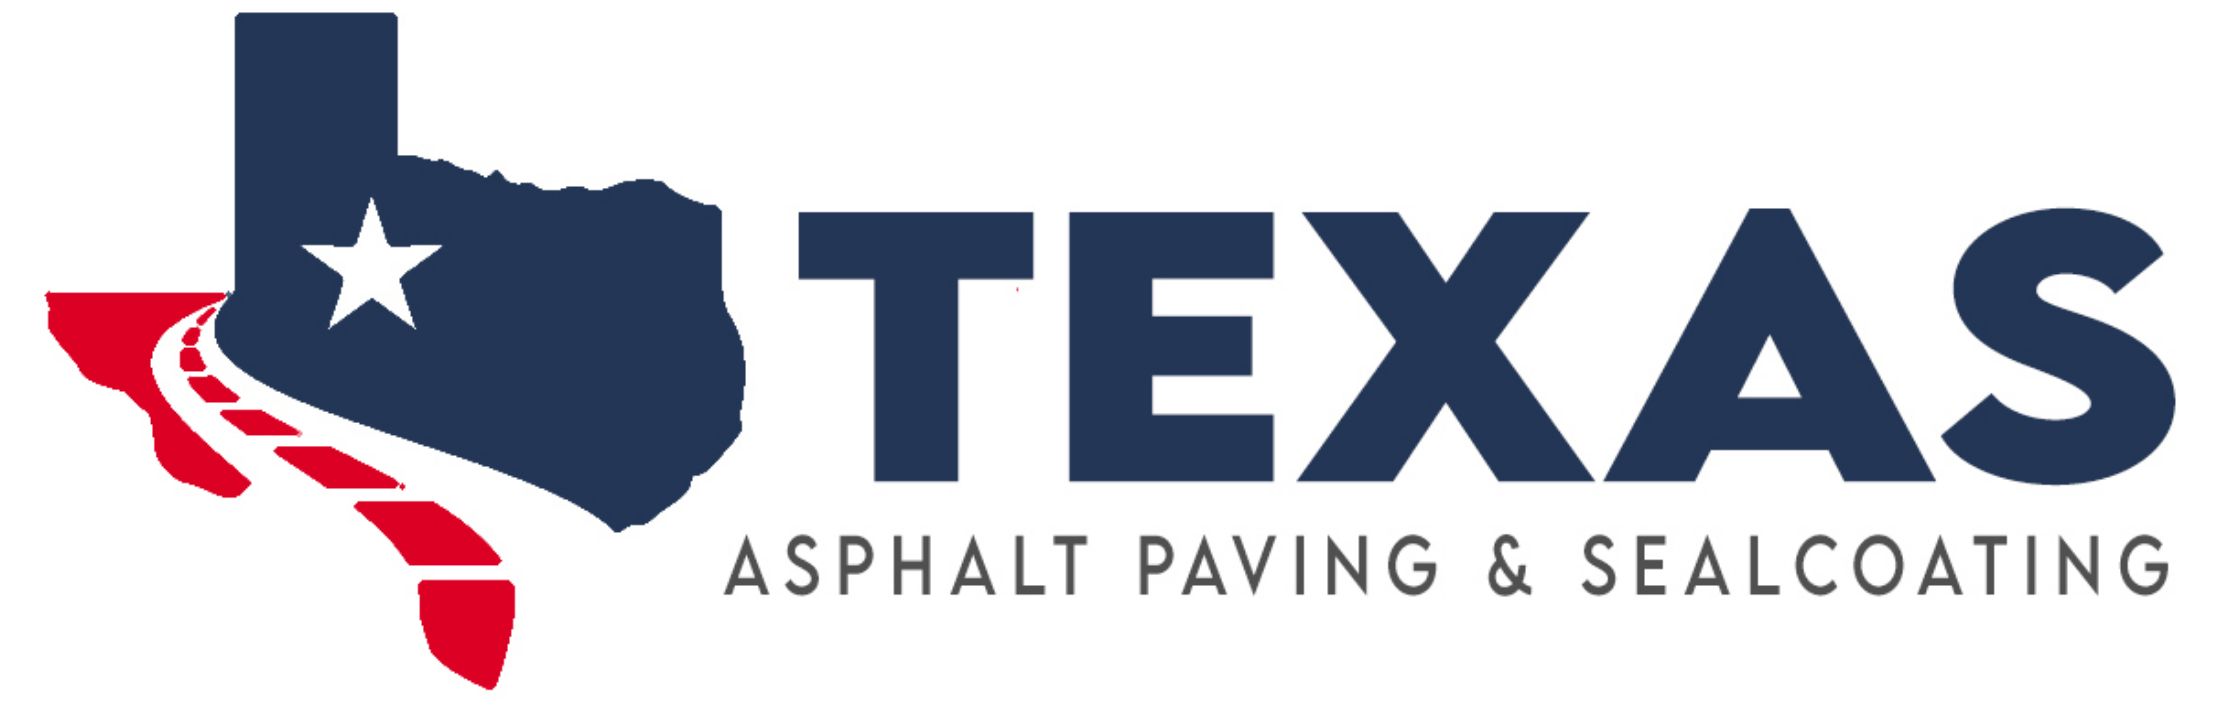 Texas Asphalt Paving and Sealcoating